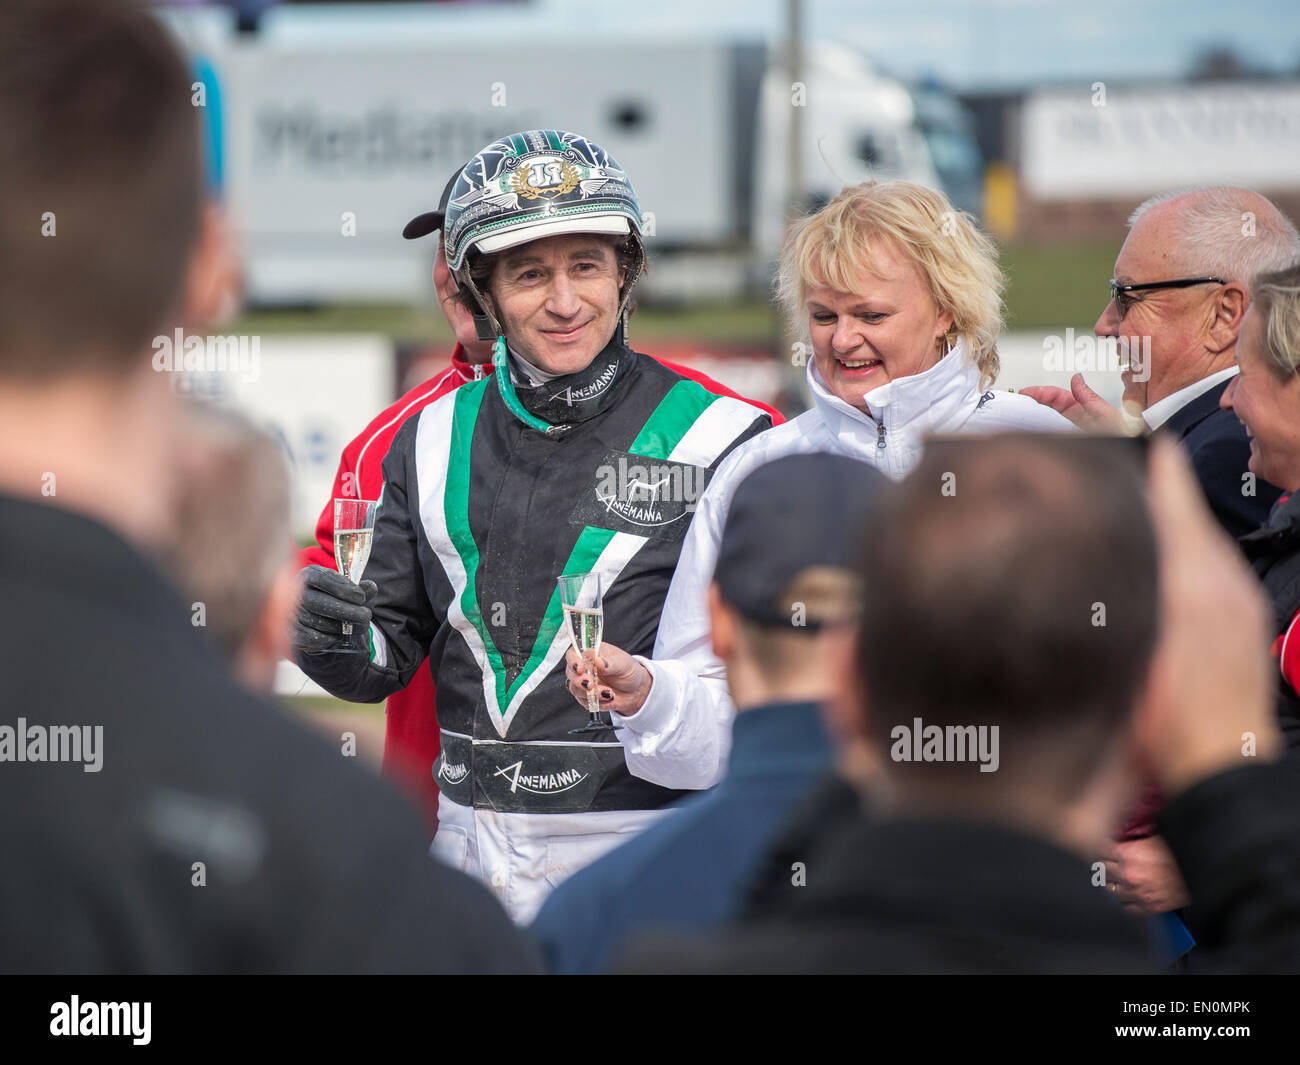 Cablaggio racing campione Johnny Takter dopo aver vinto Olympiatravet qualifiche a Mantorp race course Foto Stock